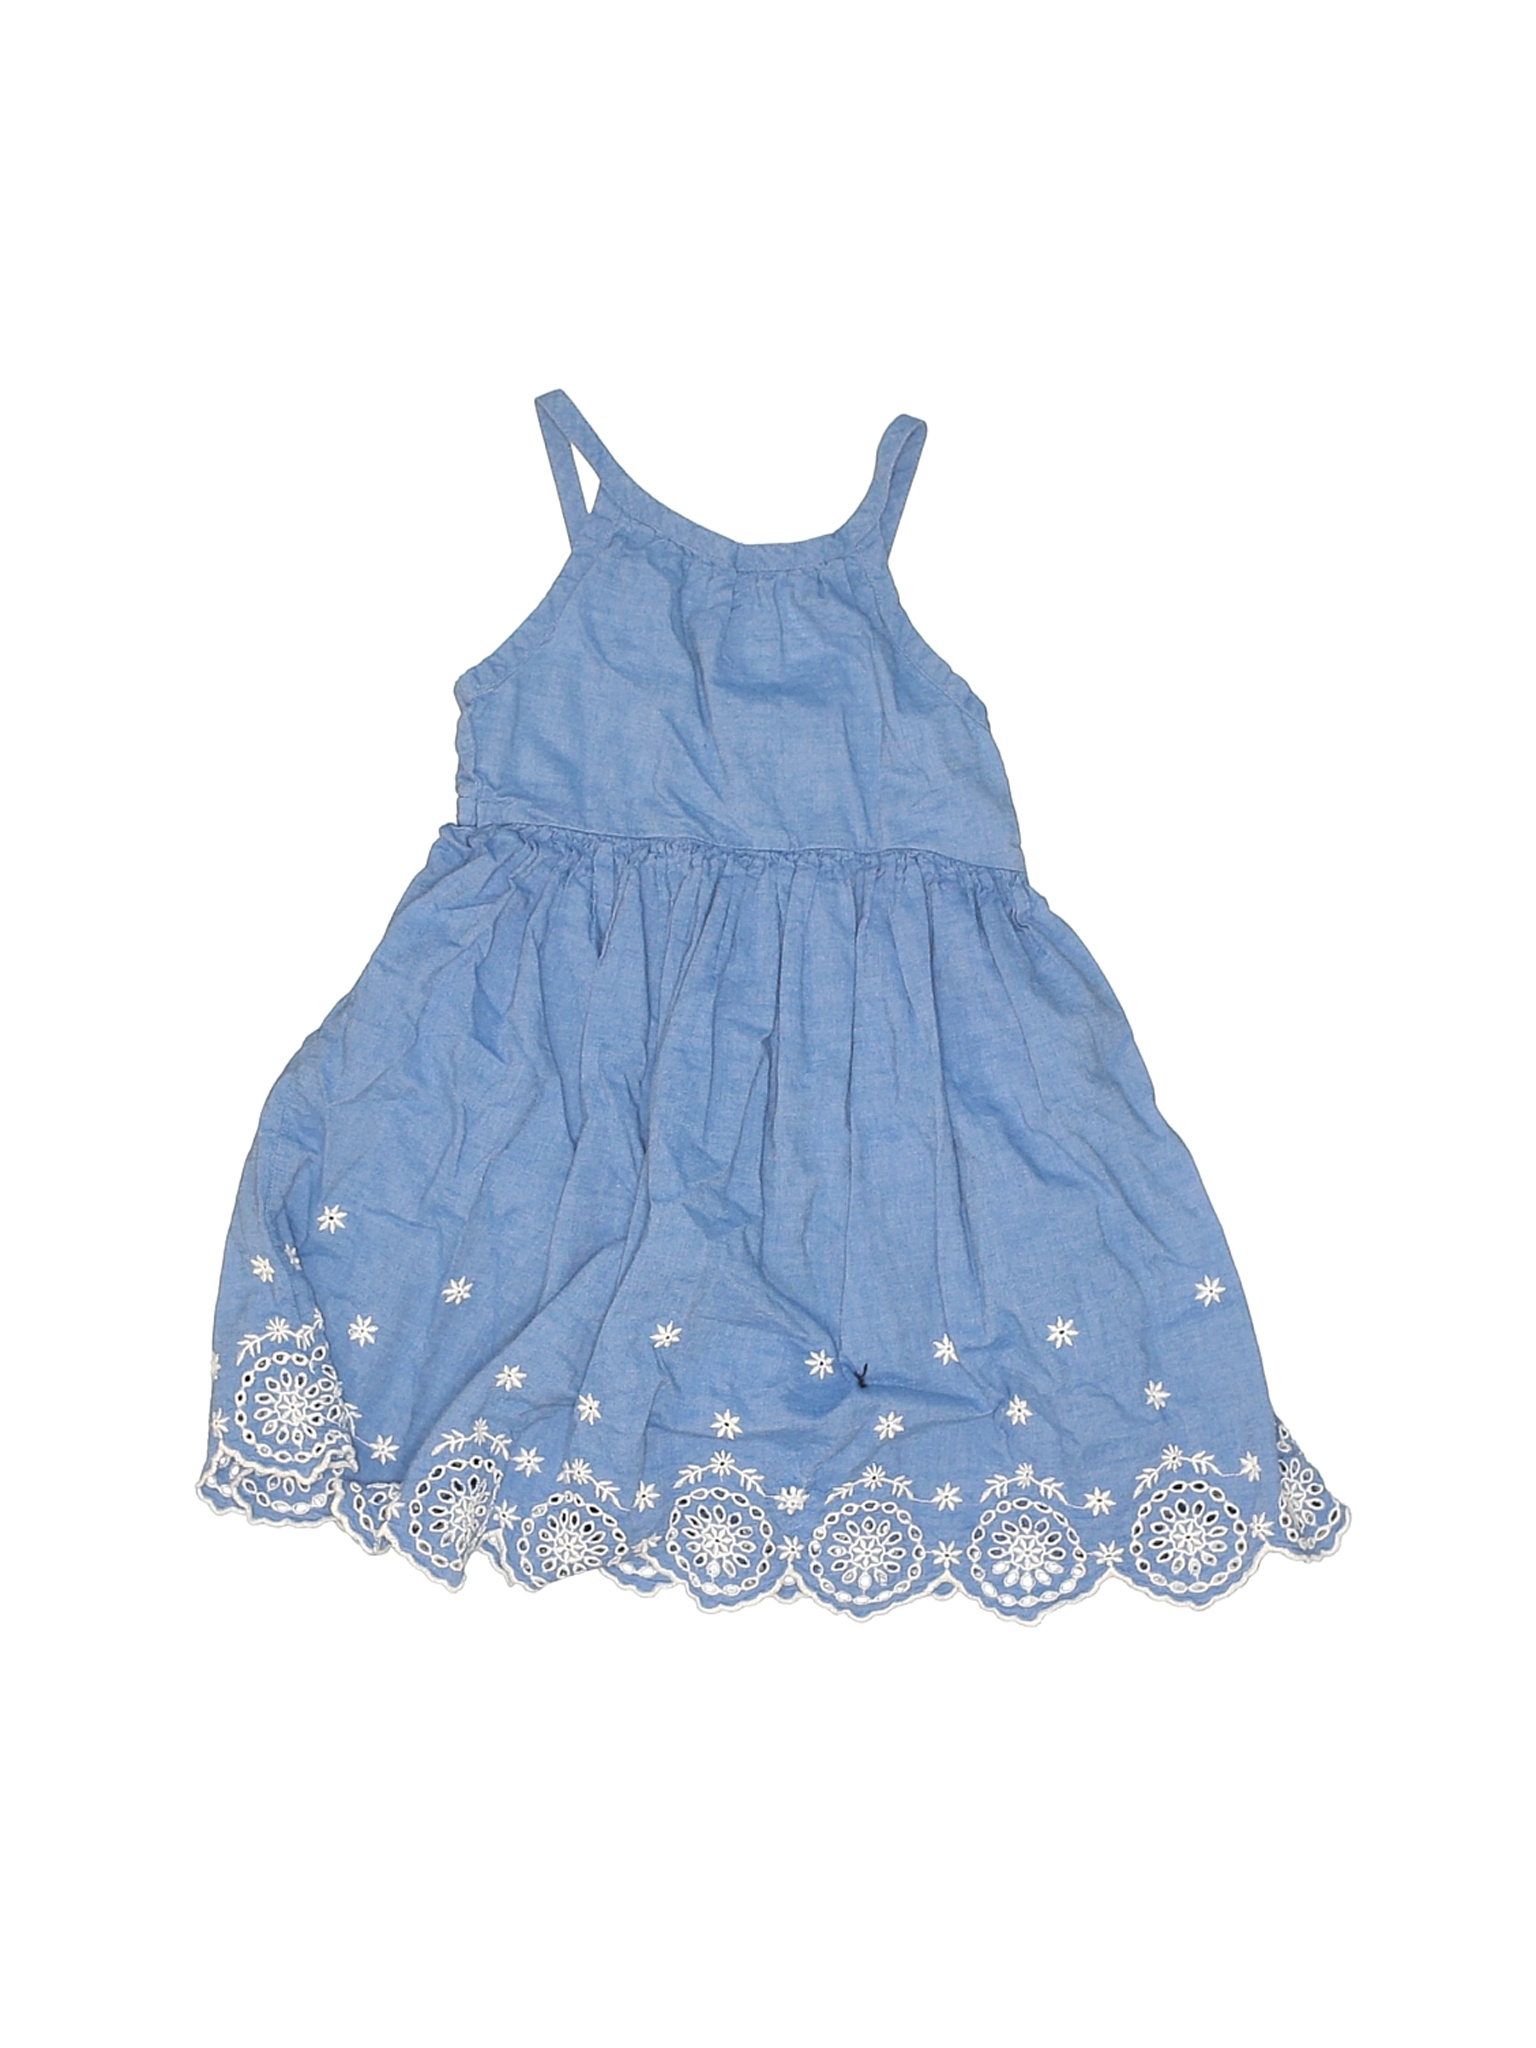 Cat & Jack Girls Blue Dress 4T | eBay